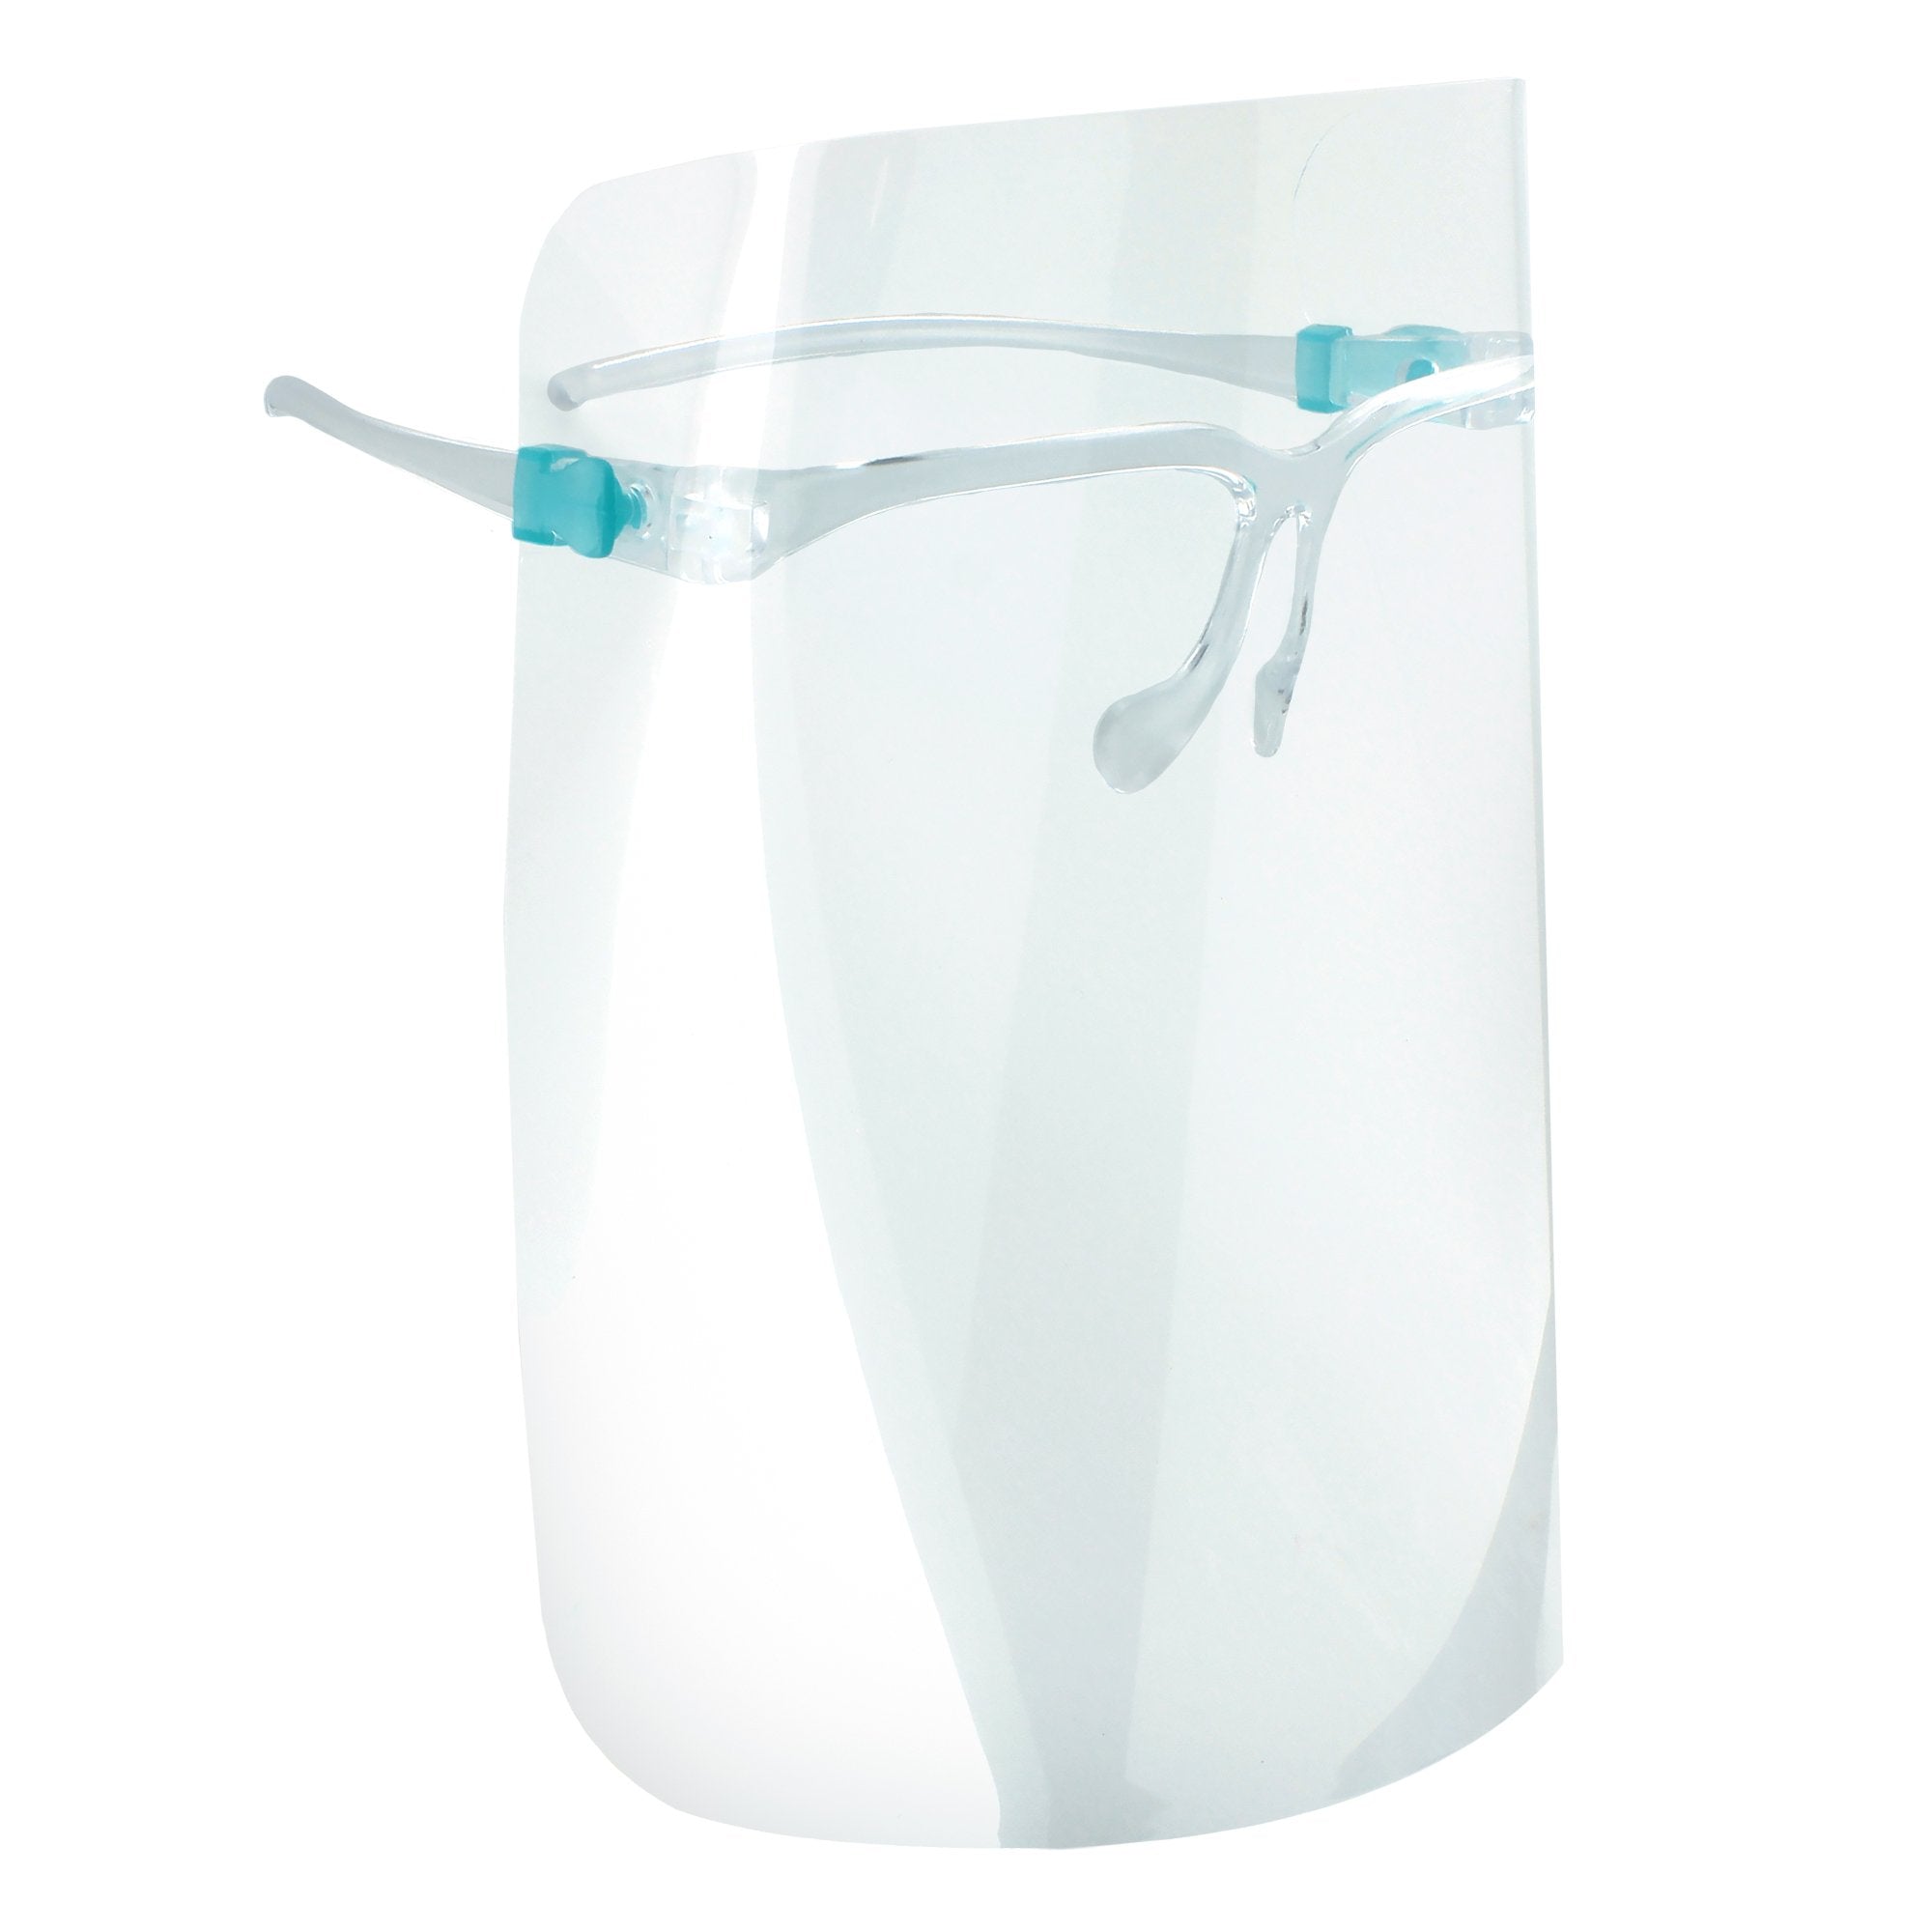 Protective Plastic Face Shield Visor with Eyeglass Frame